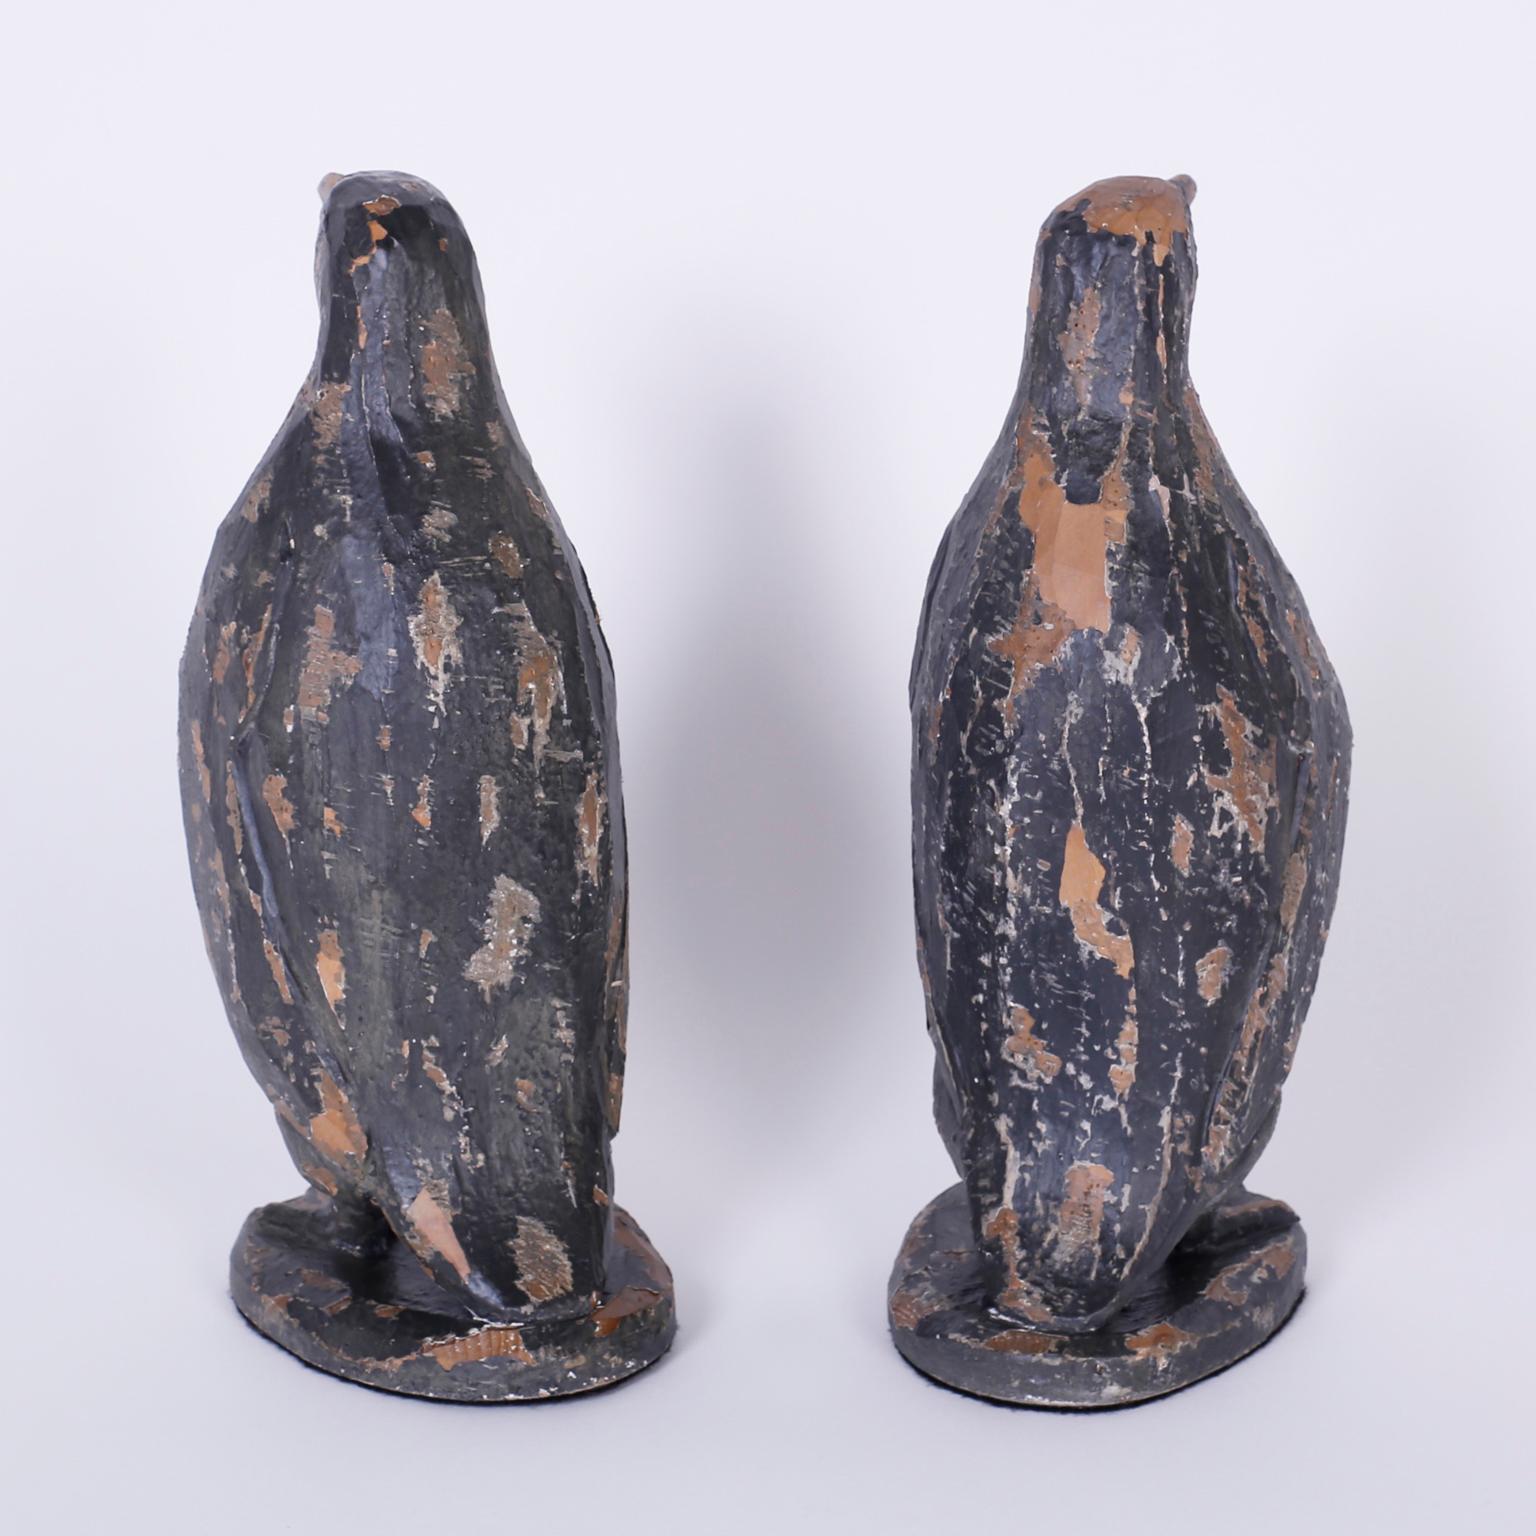 Primitive Pair of Carved Wood Penguins